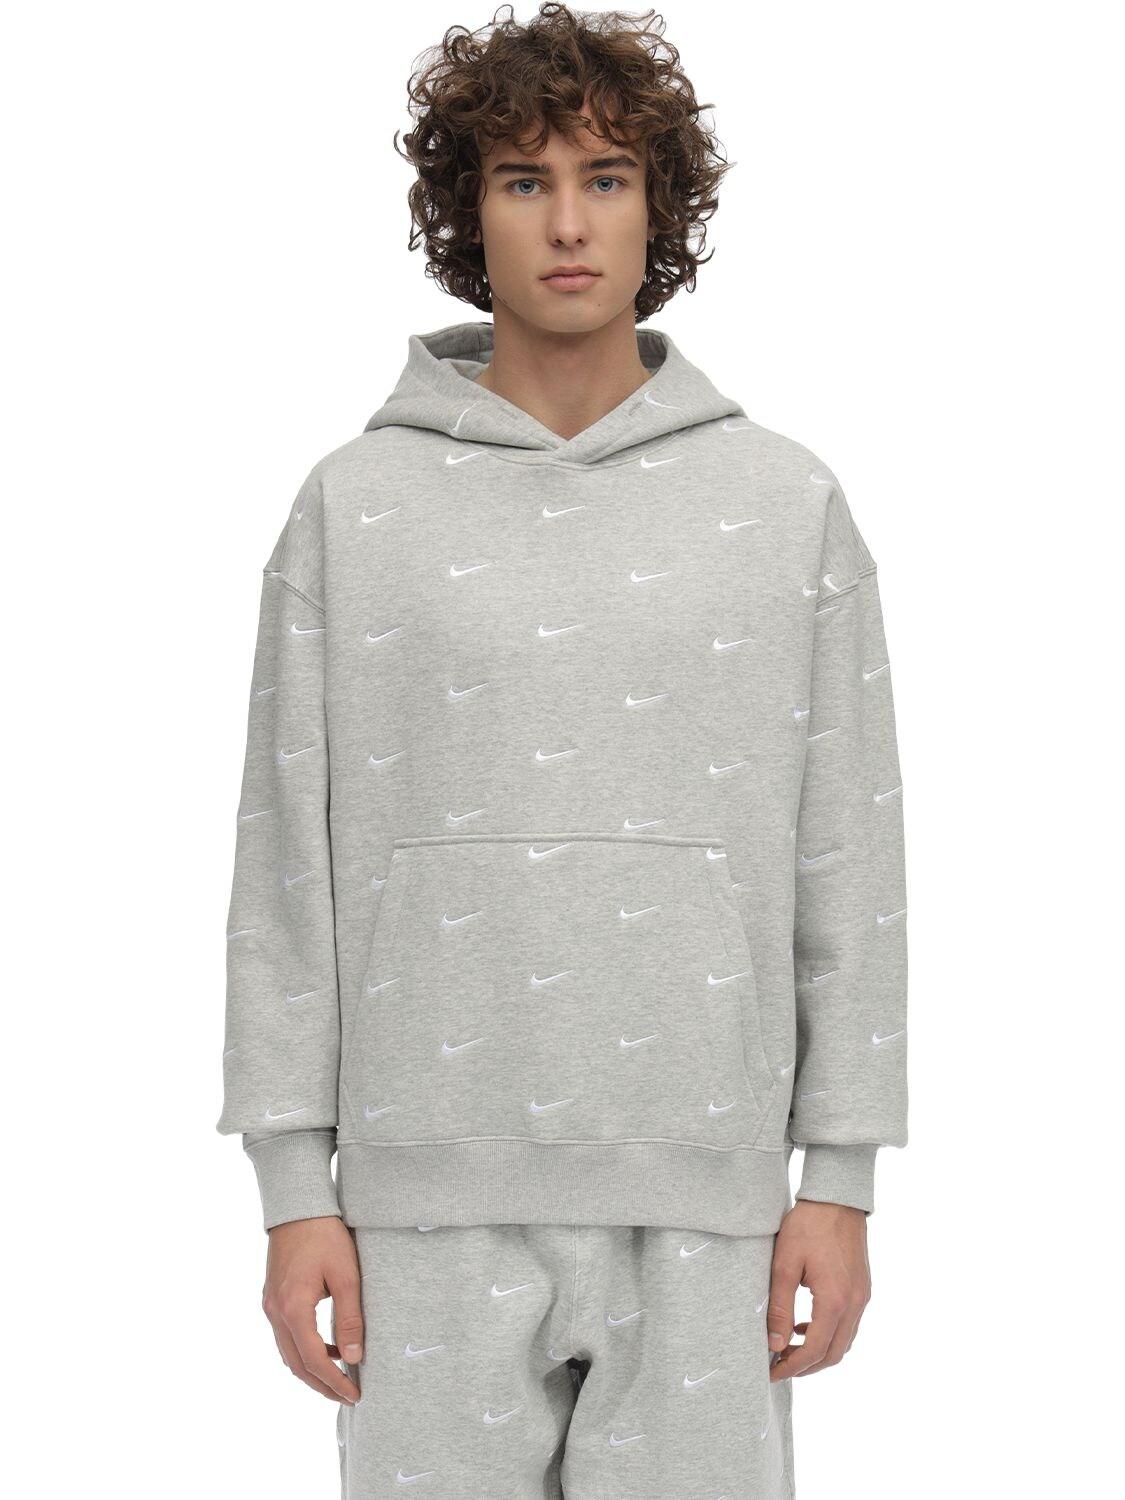 Nike Nrg Swoosh Logo Sweatshirt Hoodie in Heather Grey (Gray) for Men - Lyst